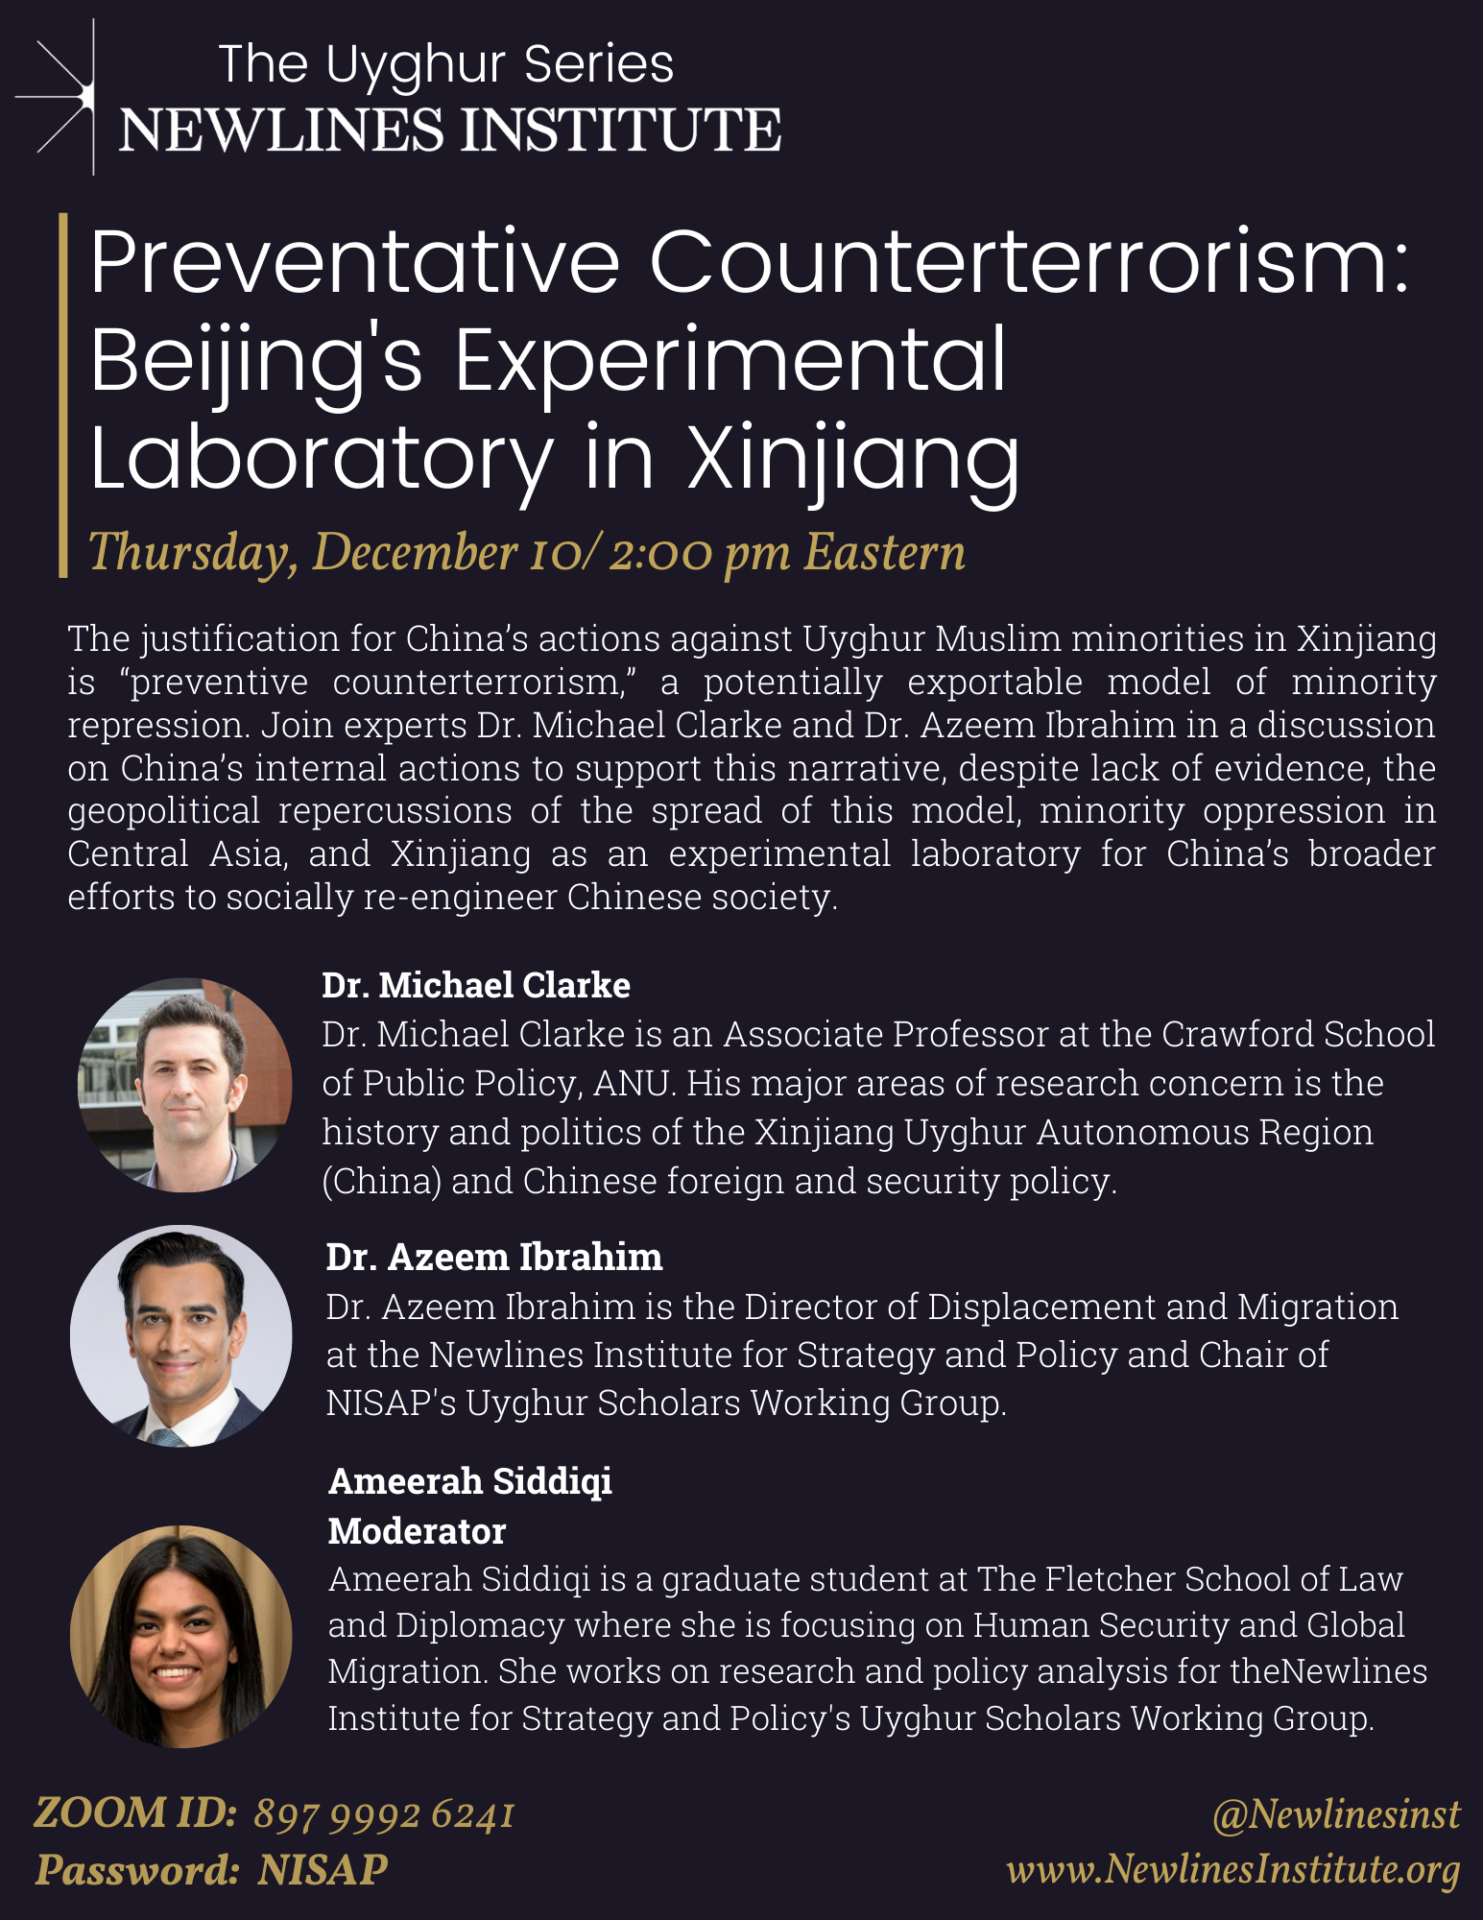 Preventative Counterterrorism: Beijing’s Experimental Laboratory in Xinjiang